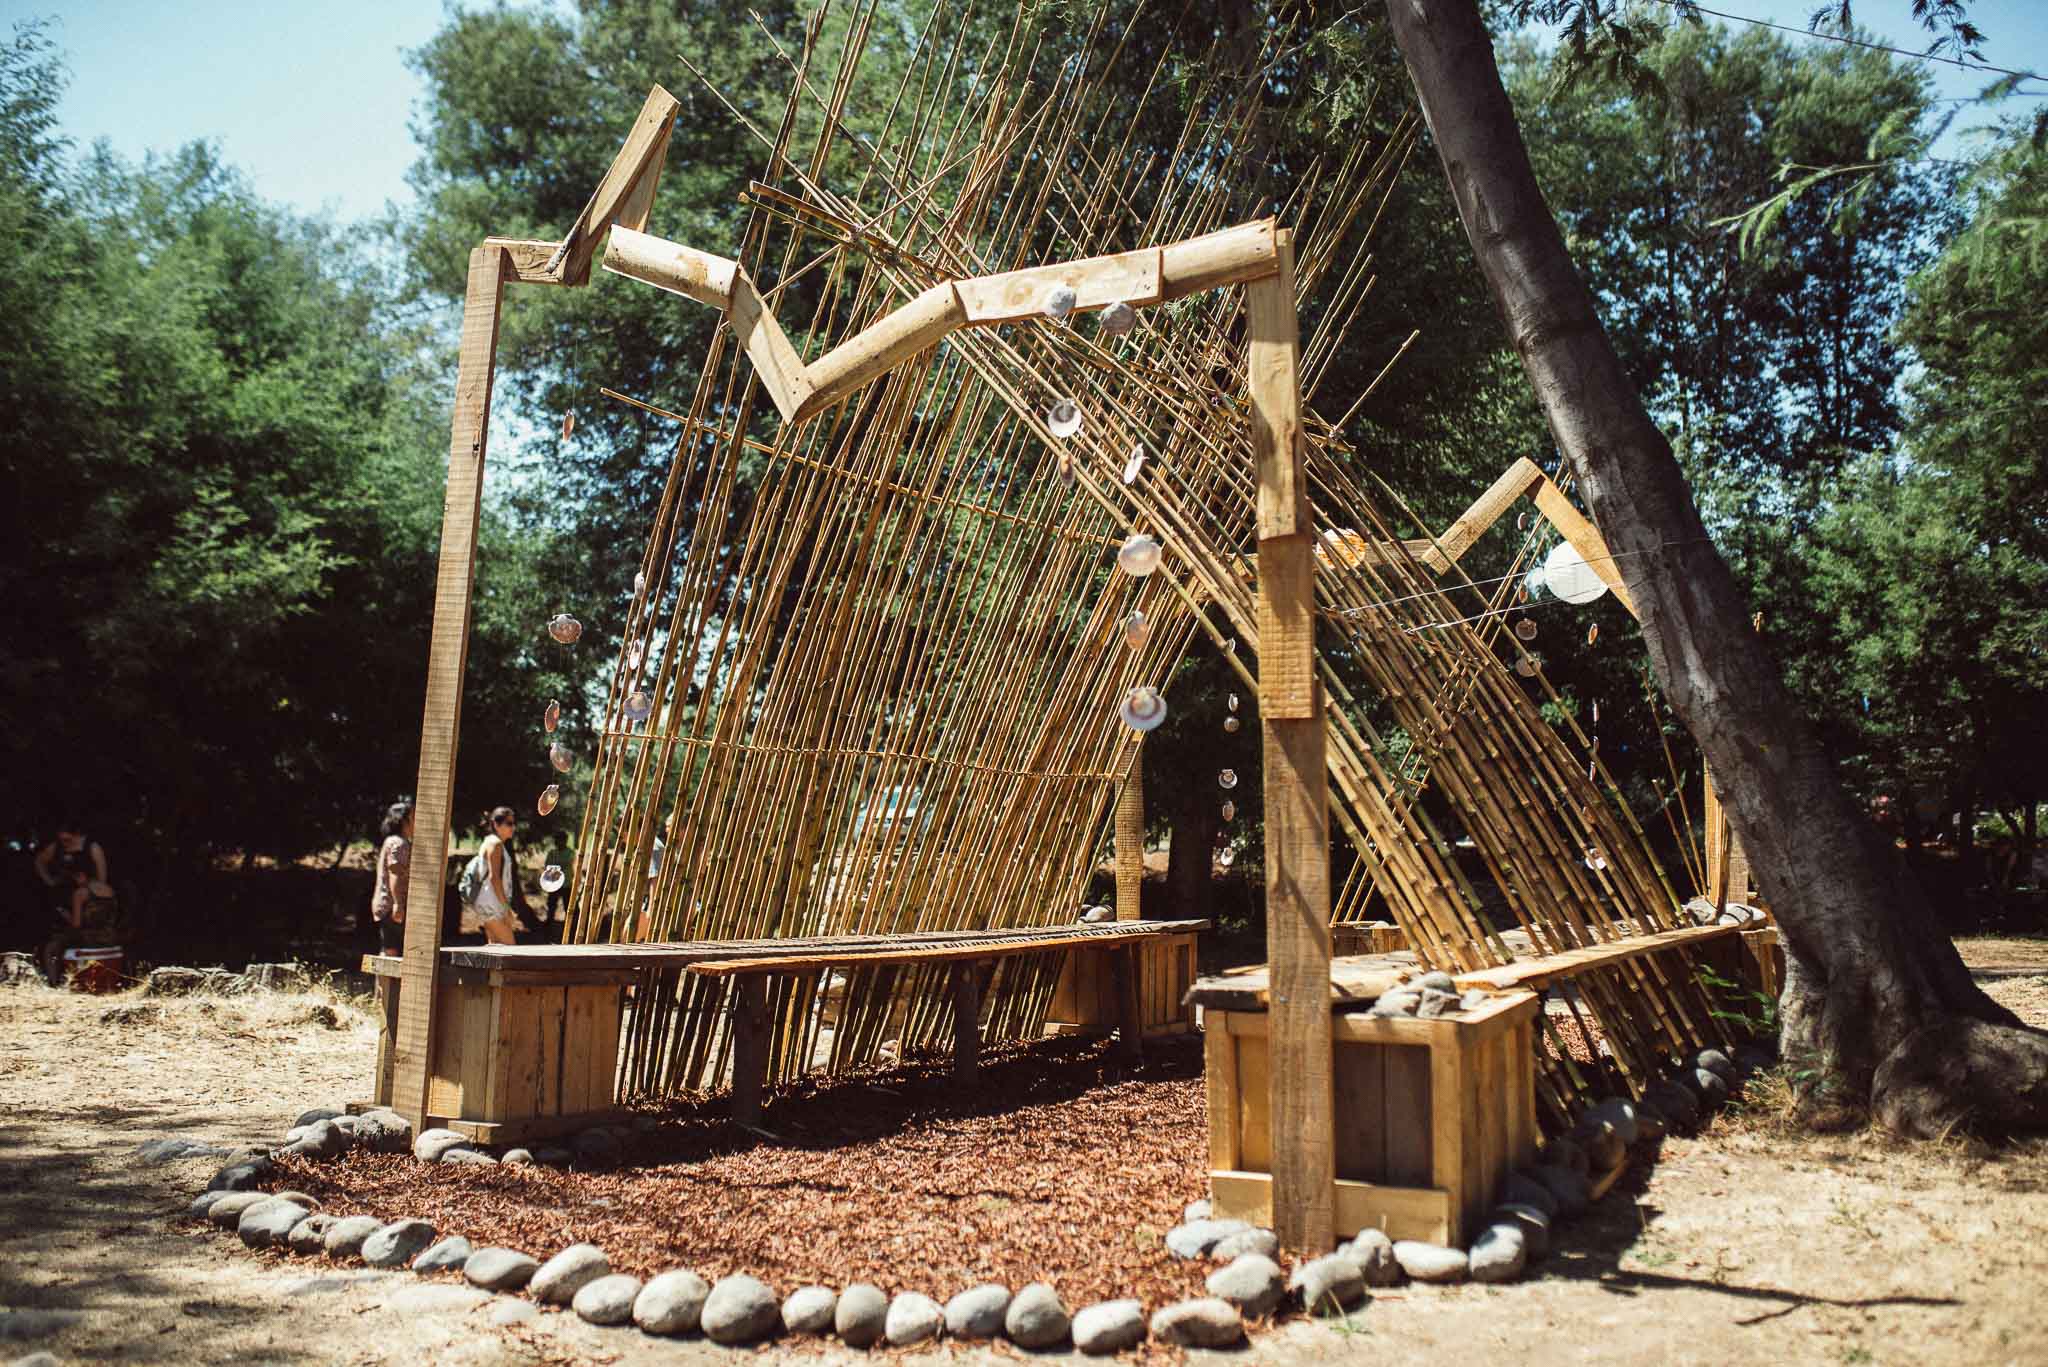 festival woodstaco-parral-diego mena fotografia